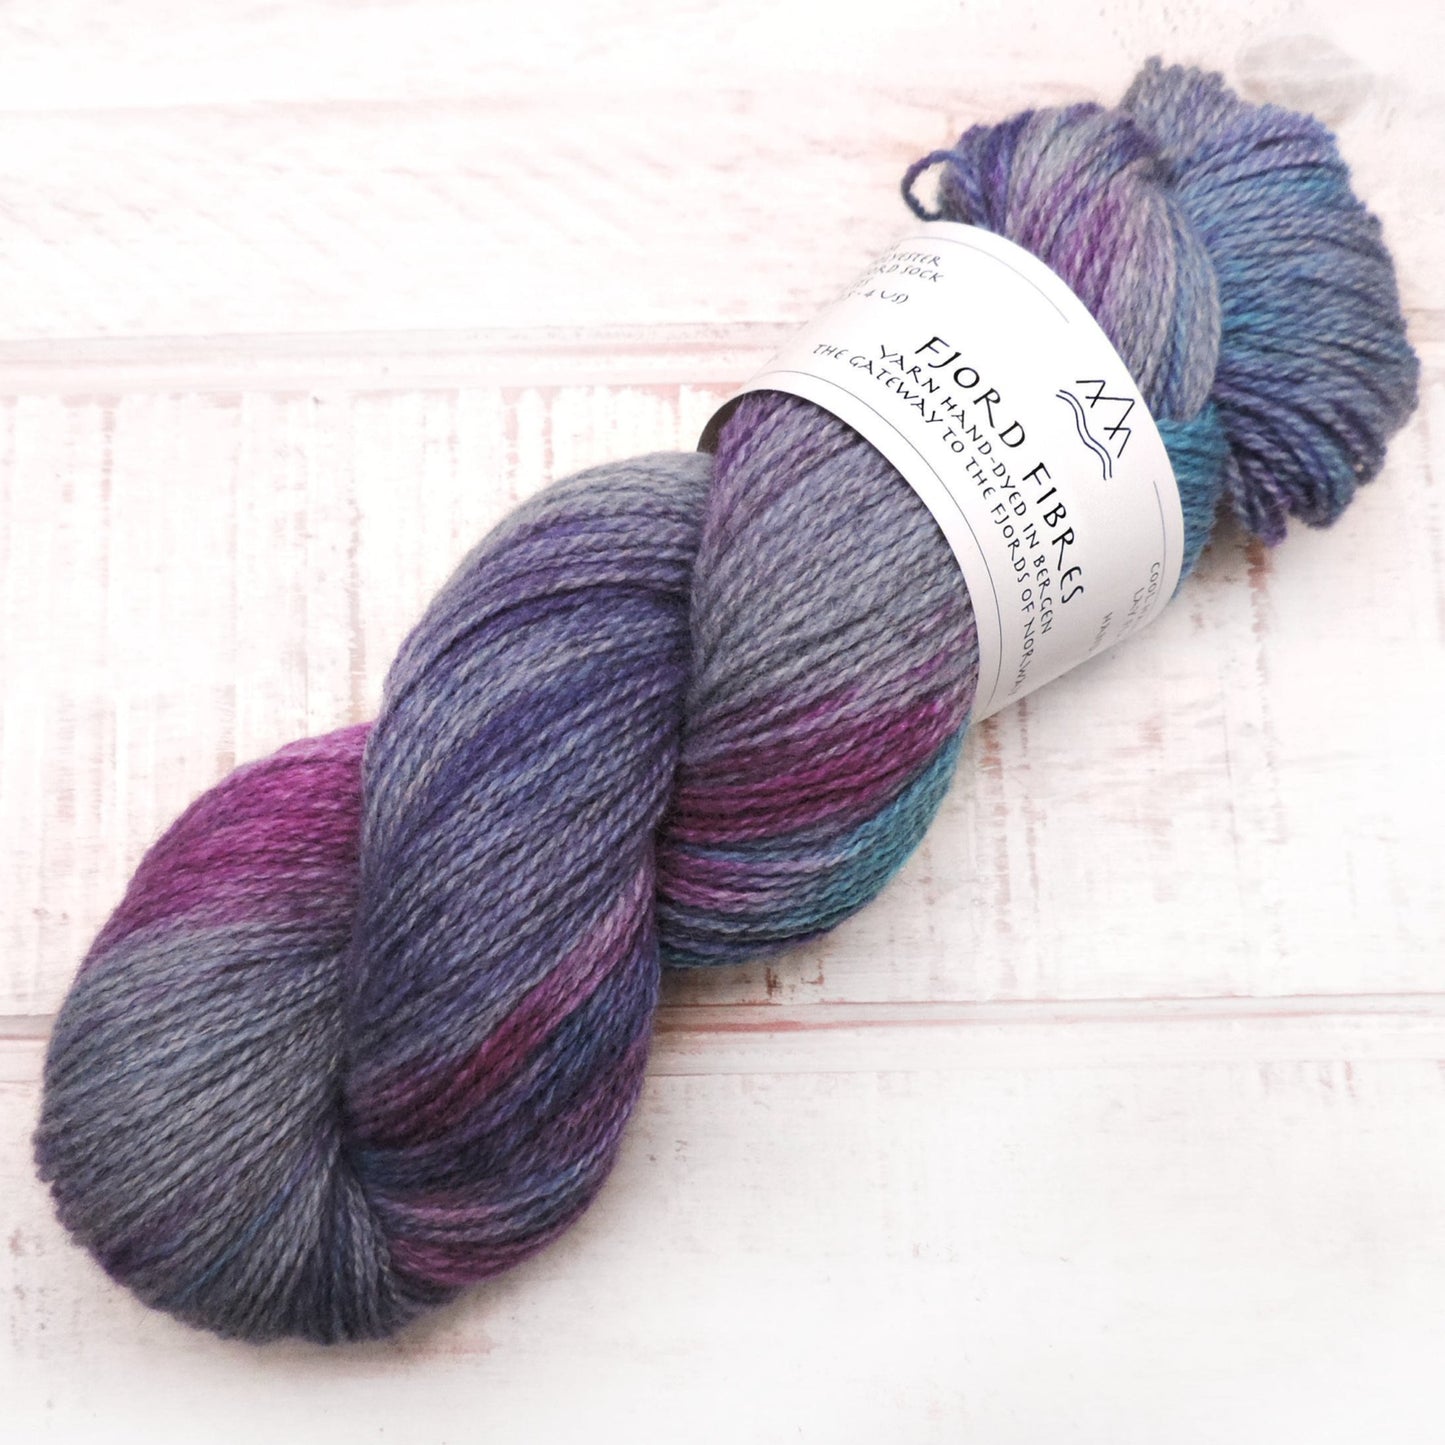 Cosmic Forces - Trollfjord Sock - Variegated Yarn - Hand dyed yarn